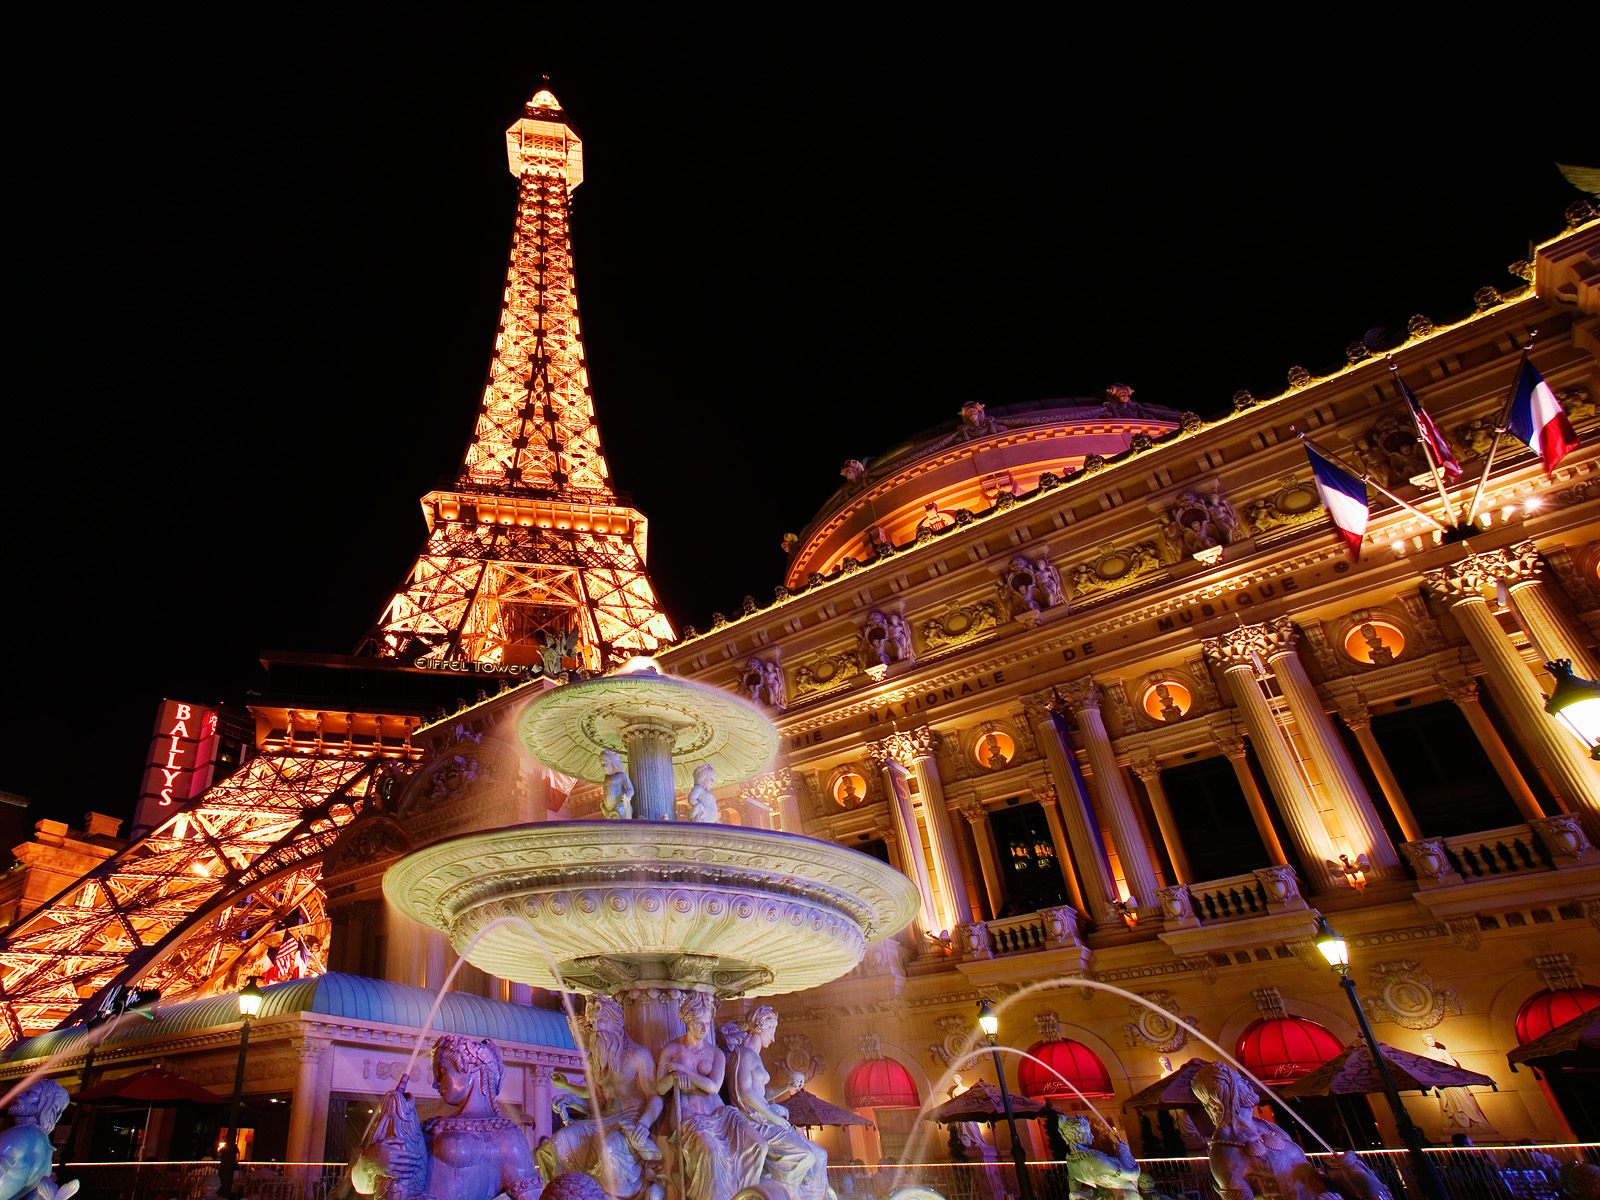 Paris Las Vegas hotel and casino on the Las Vegas Strip, featuring the iconic Eiffel Tower.